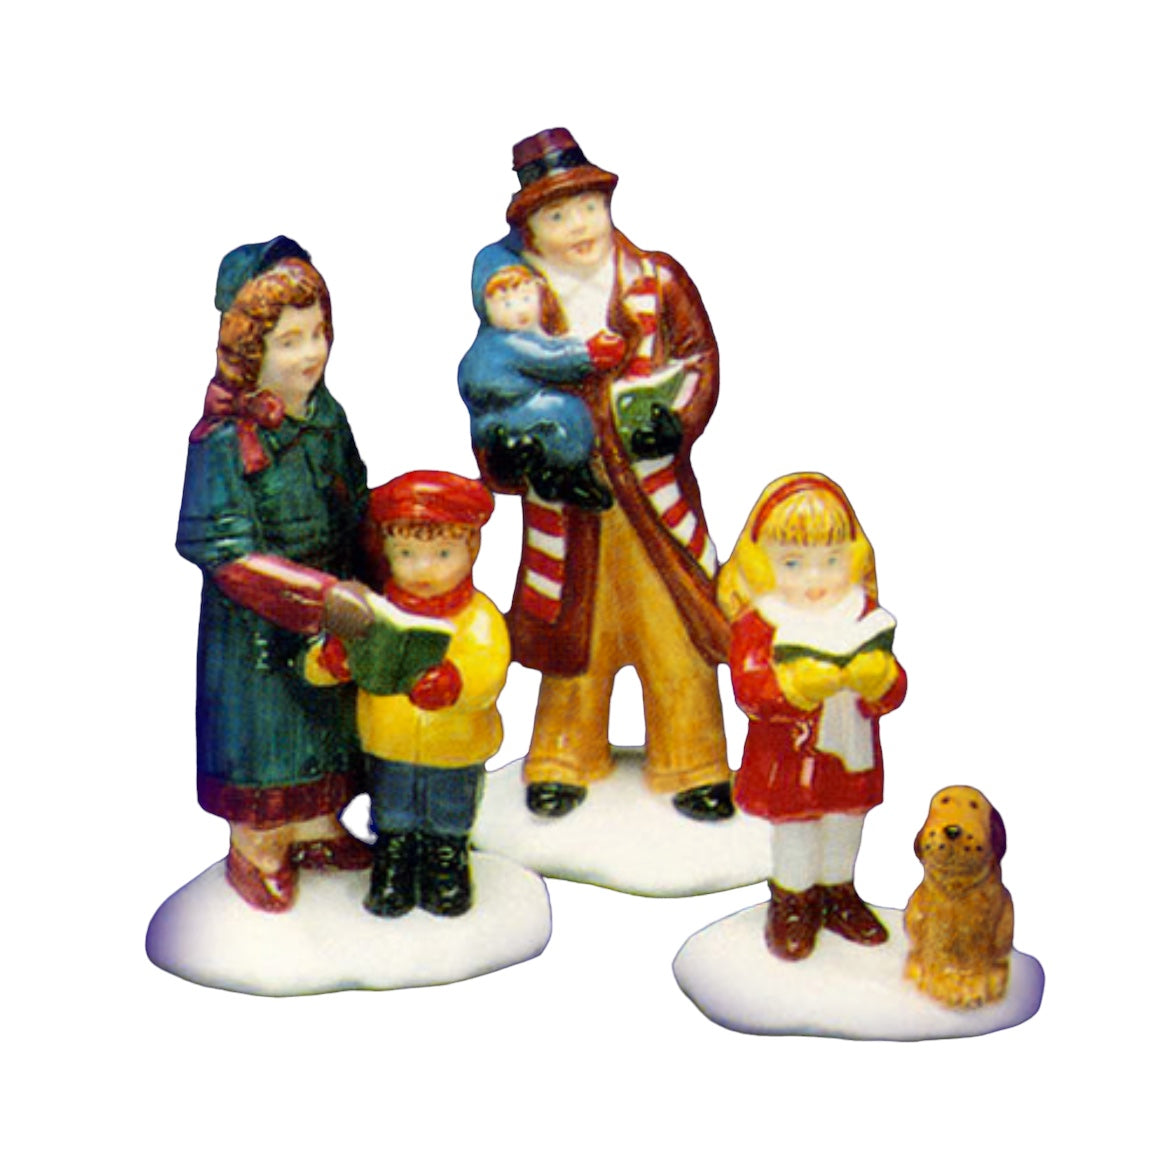 Department 56 - Snow Village - Caroling Family (Set of 3)